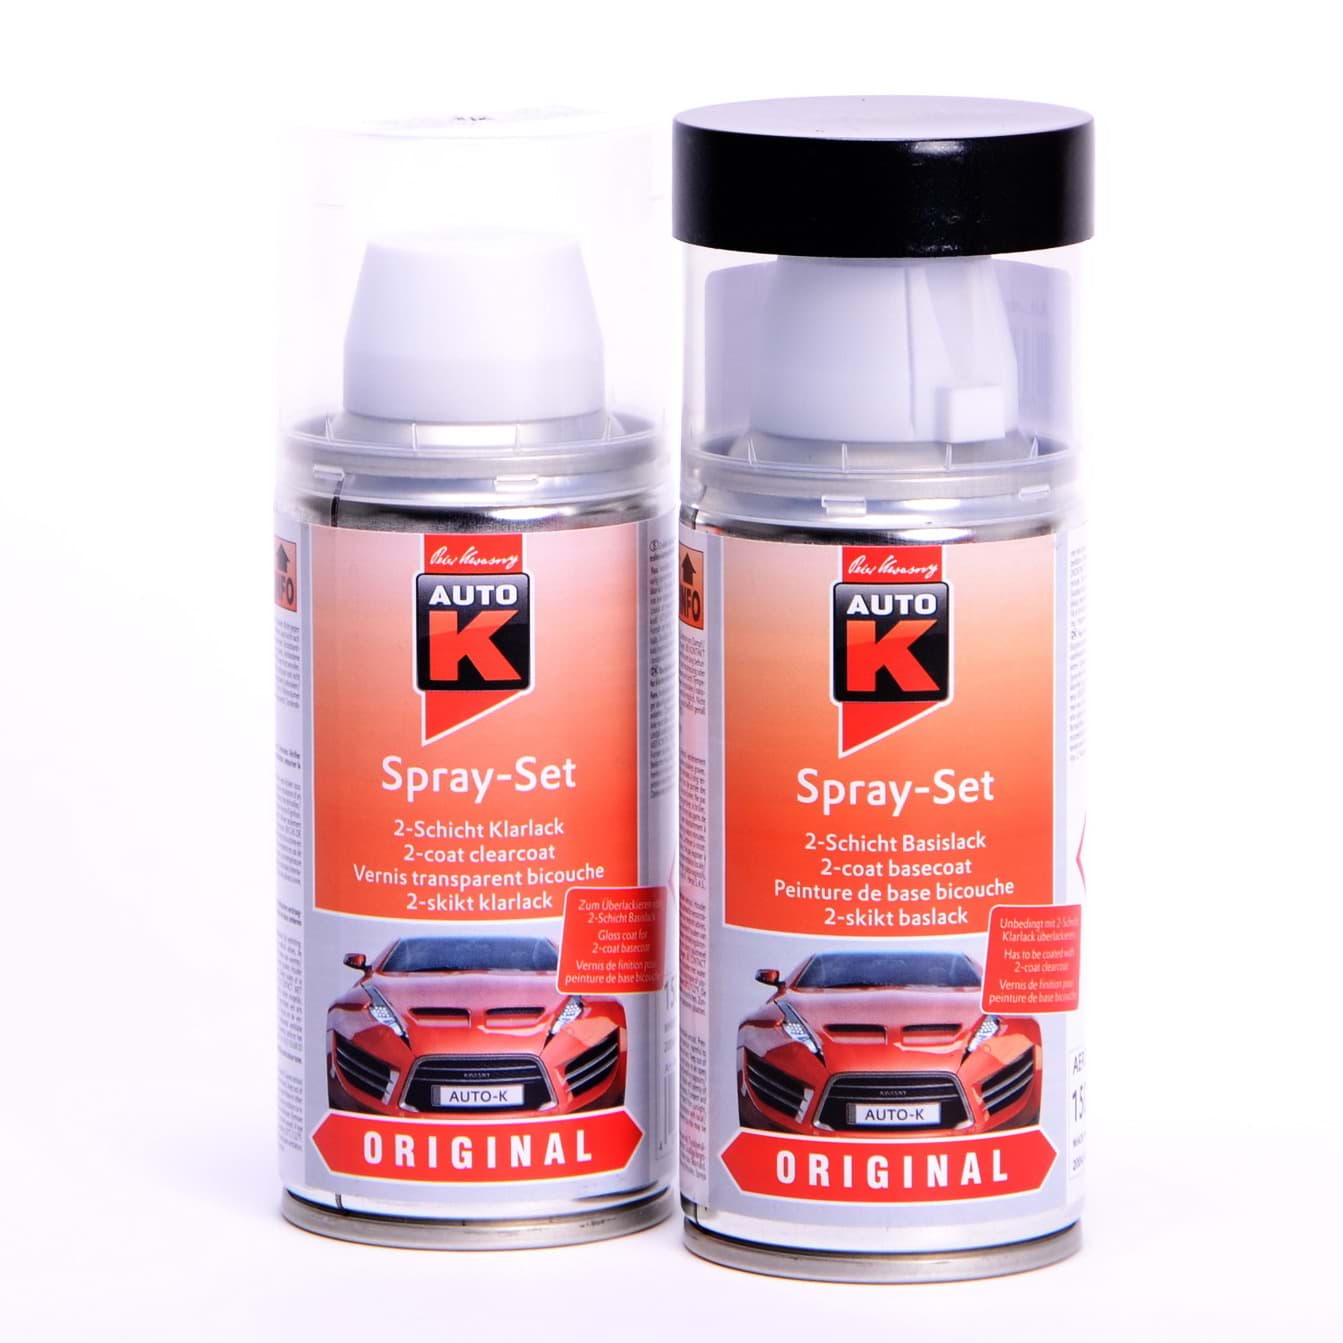 Auto-K Spray-Set Autolack für Opel 266 Novaschwarz met 21361 resmi